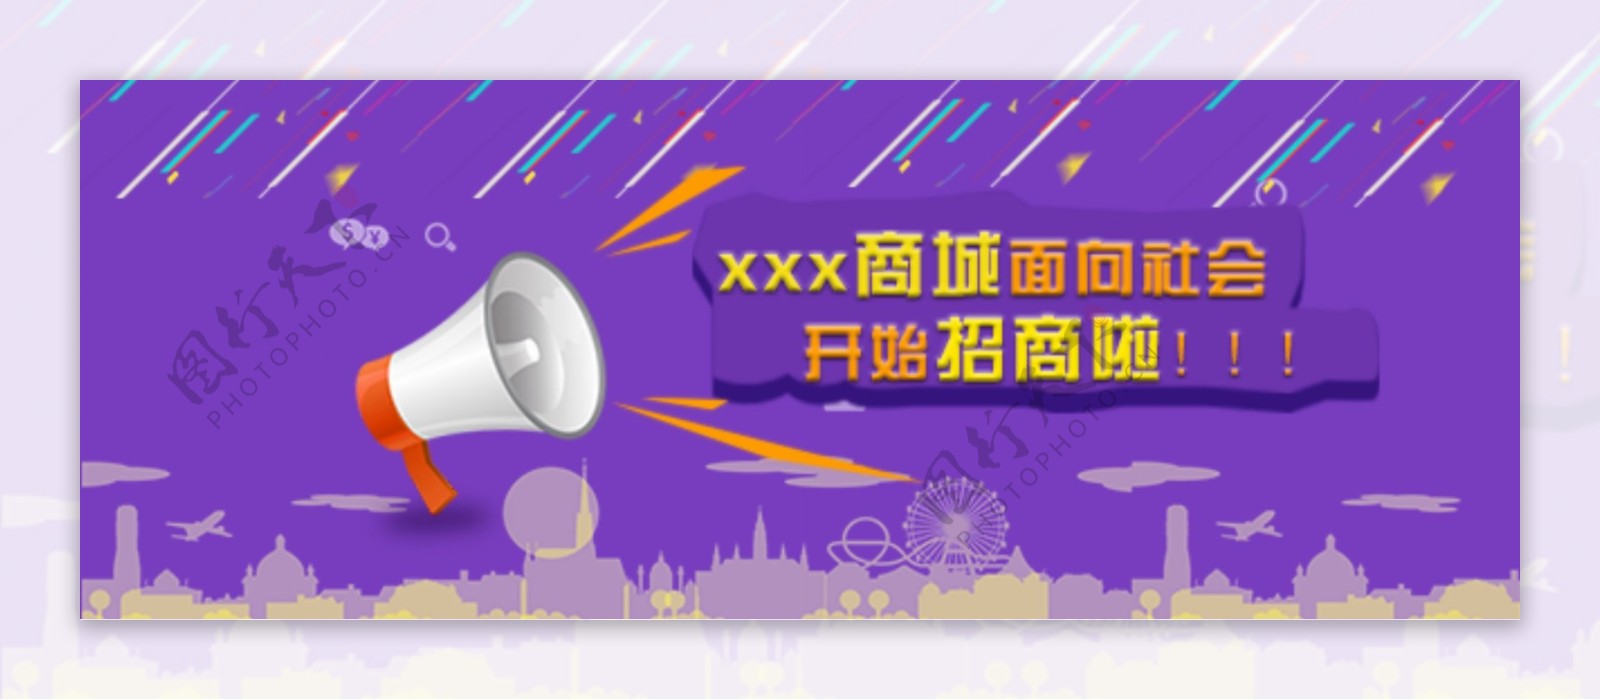 招商广告网页banner